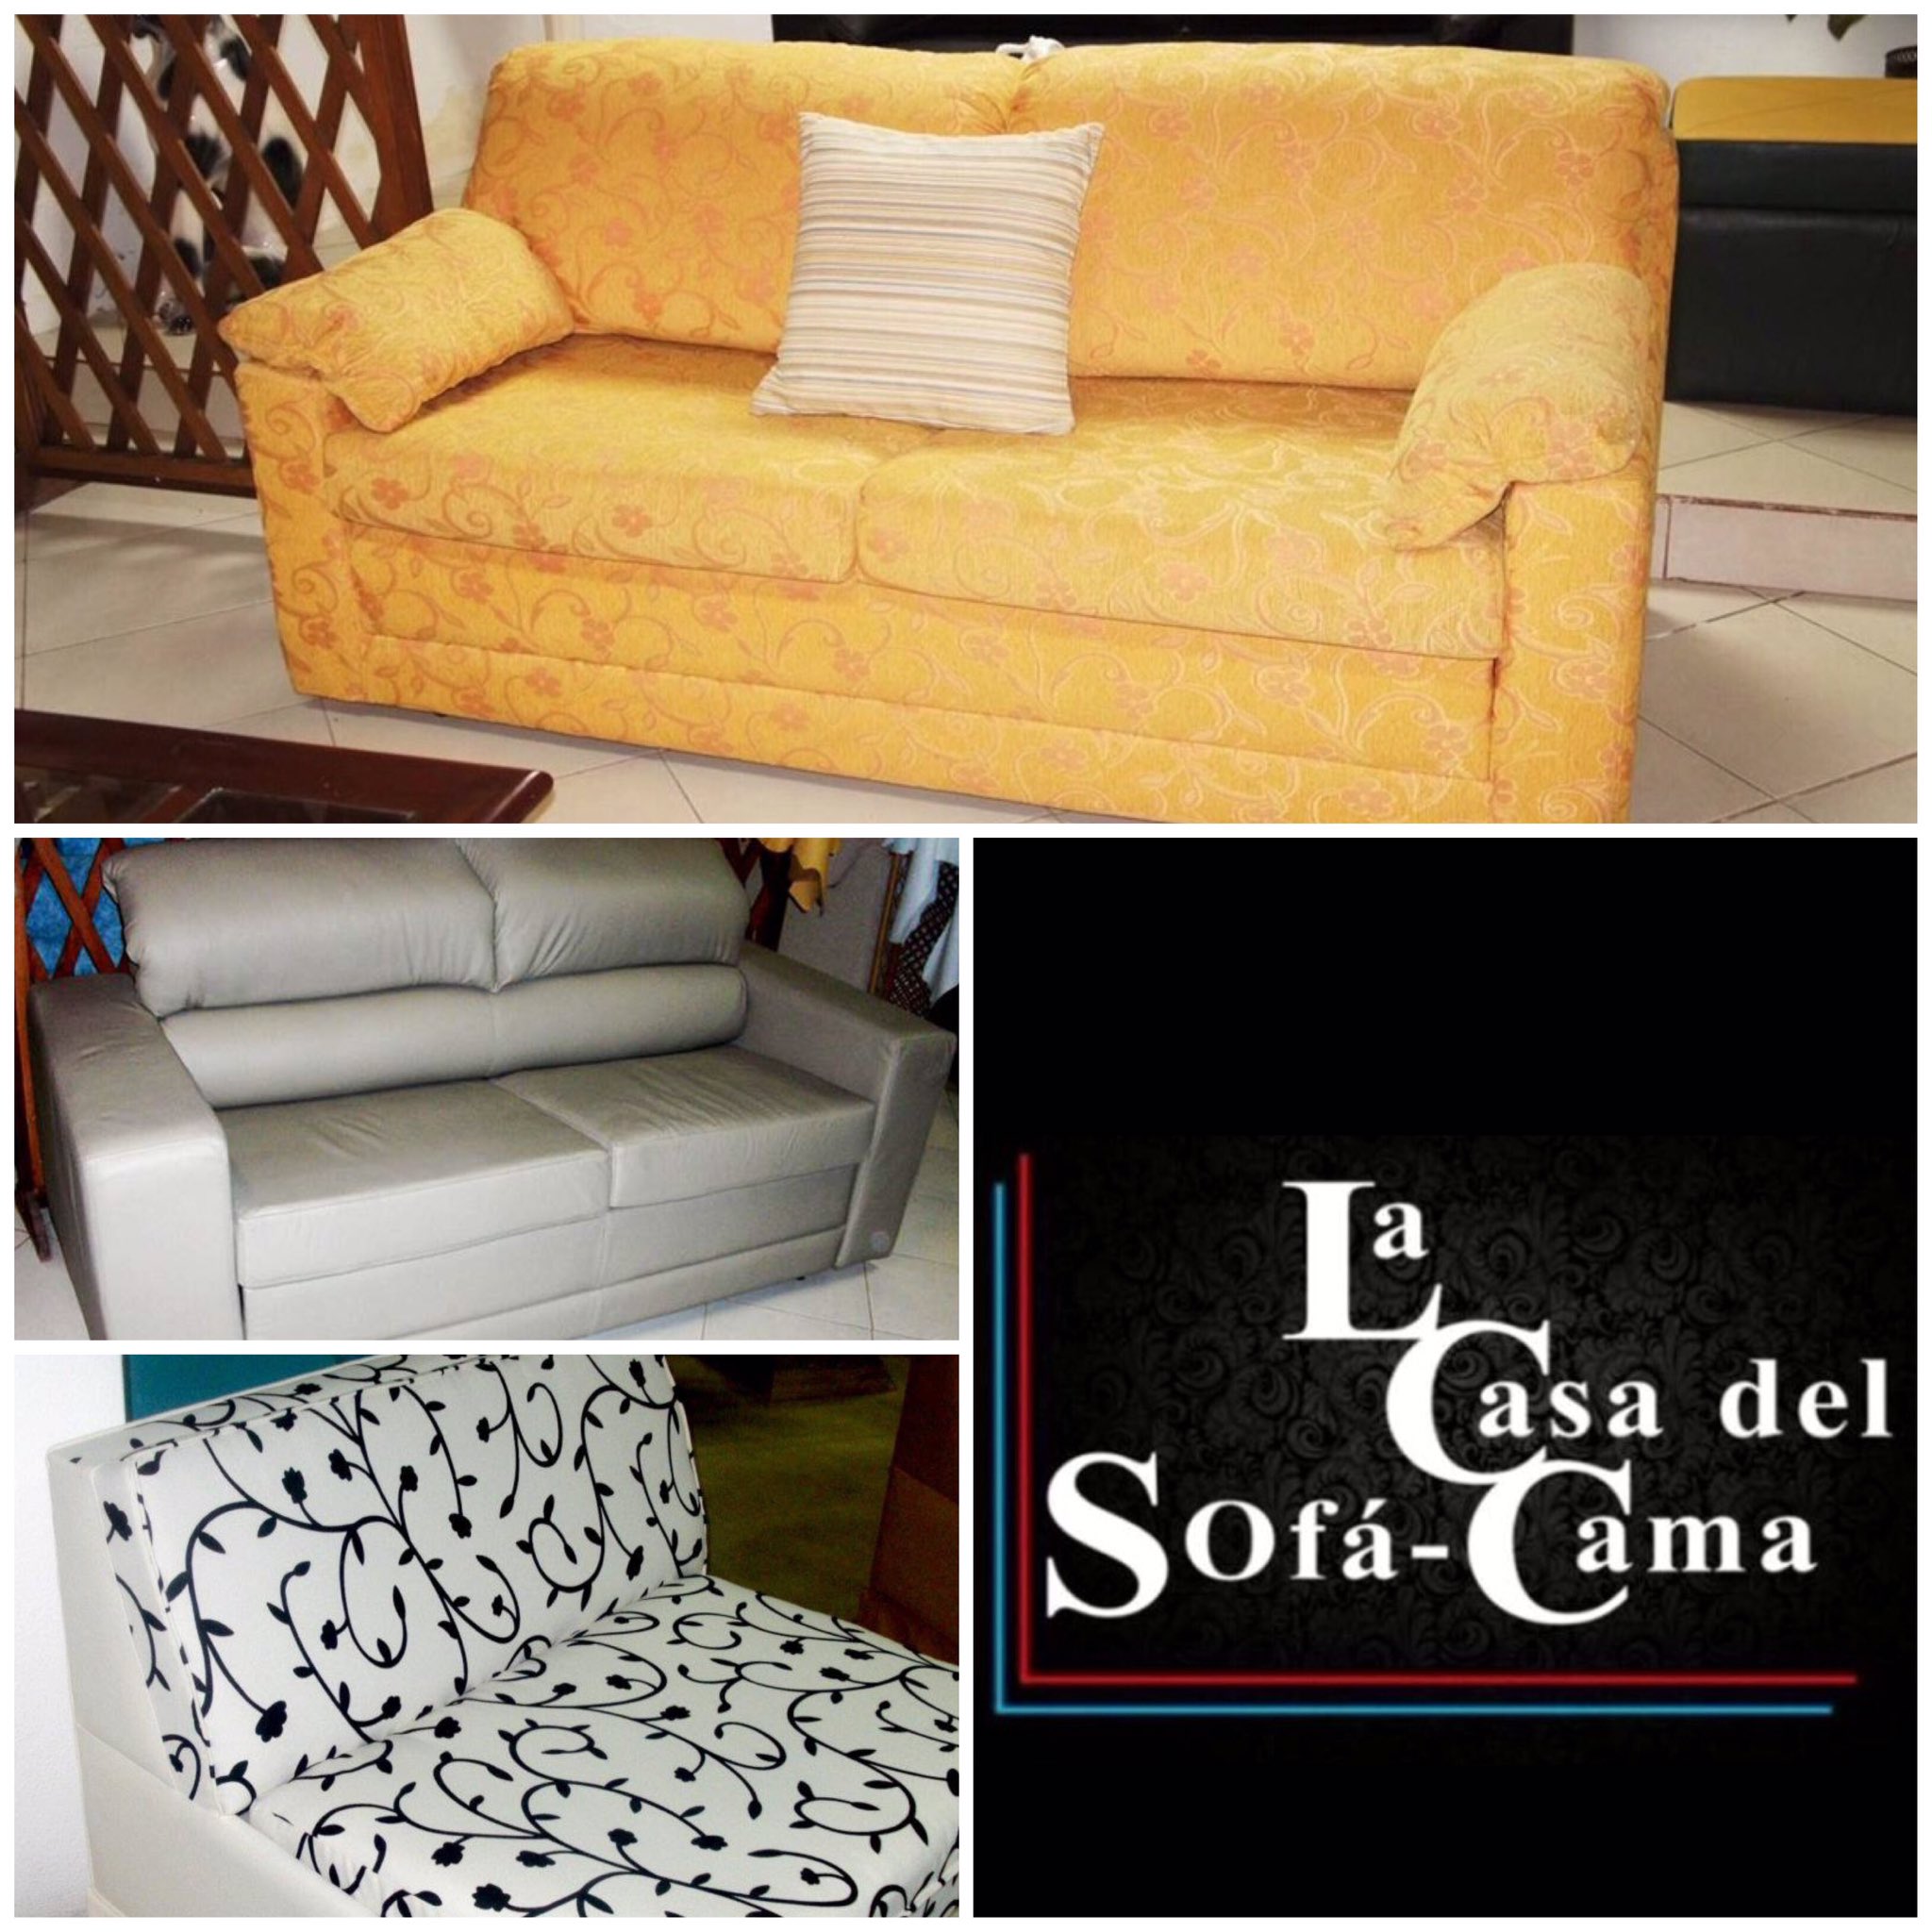 Casa del Sofá Cama (@lacasadelsofa) / Twitter